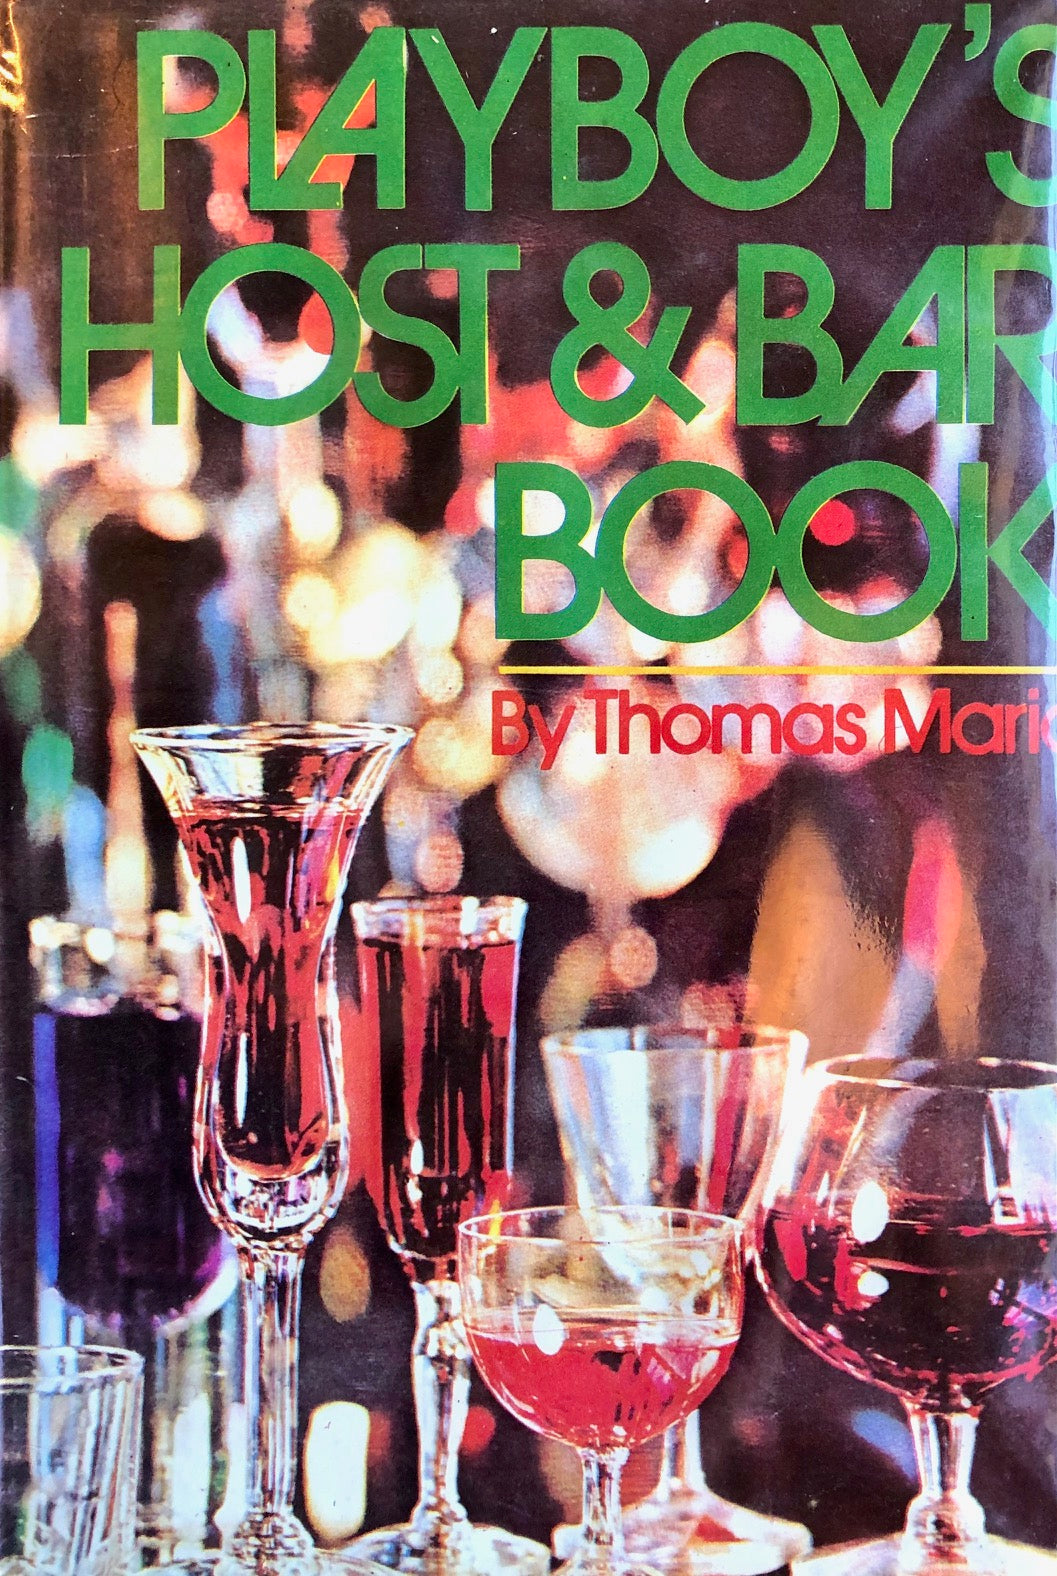 (Cocktails) Thomas Mario. Playboy's Host & Bar Book.